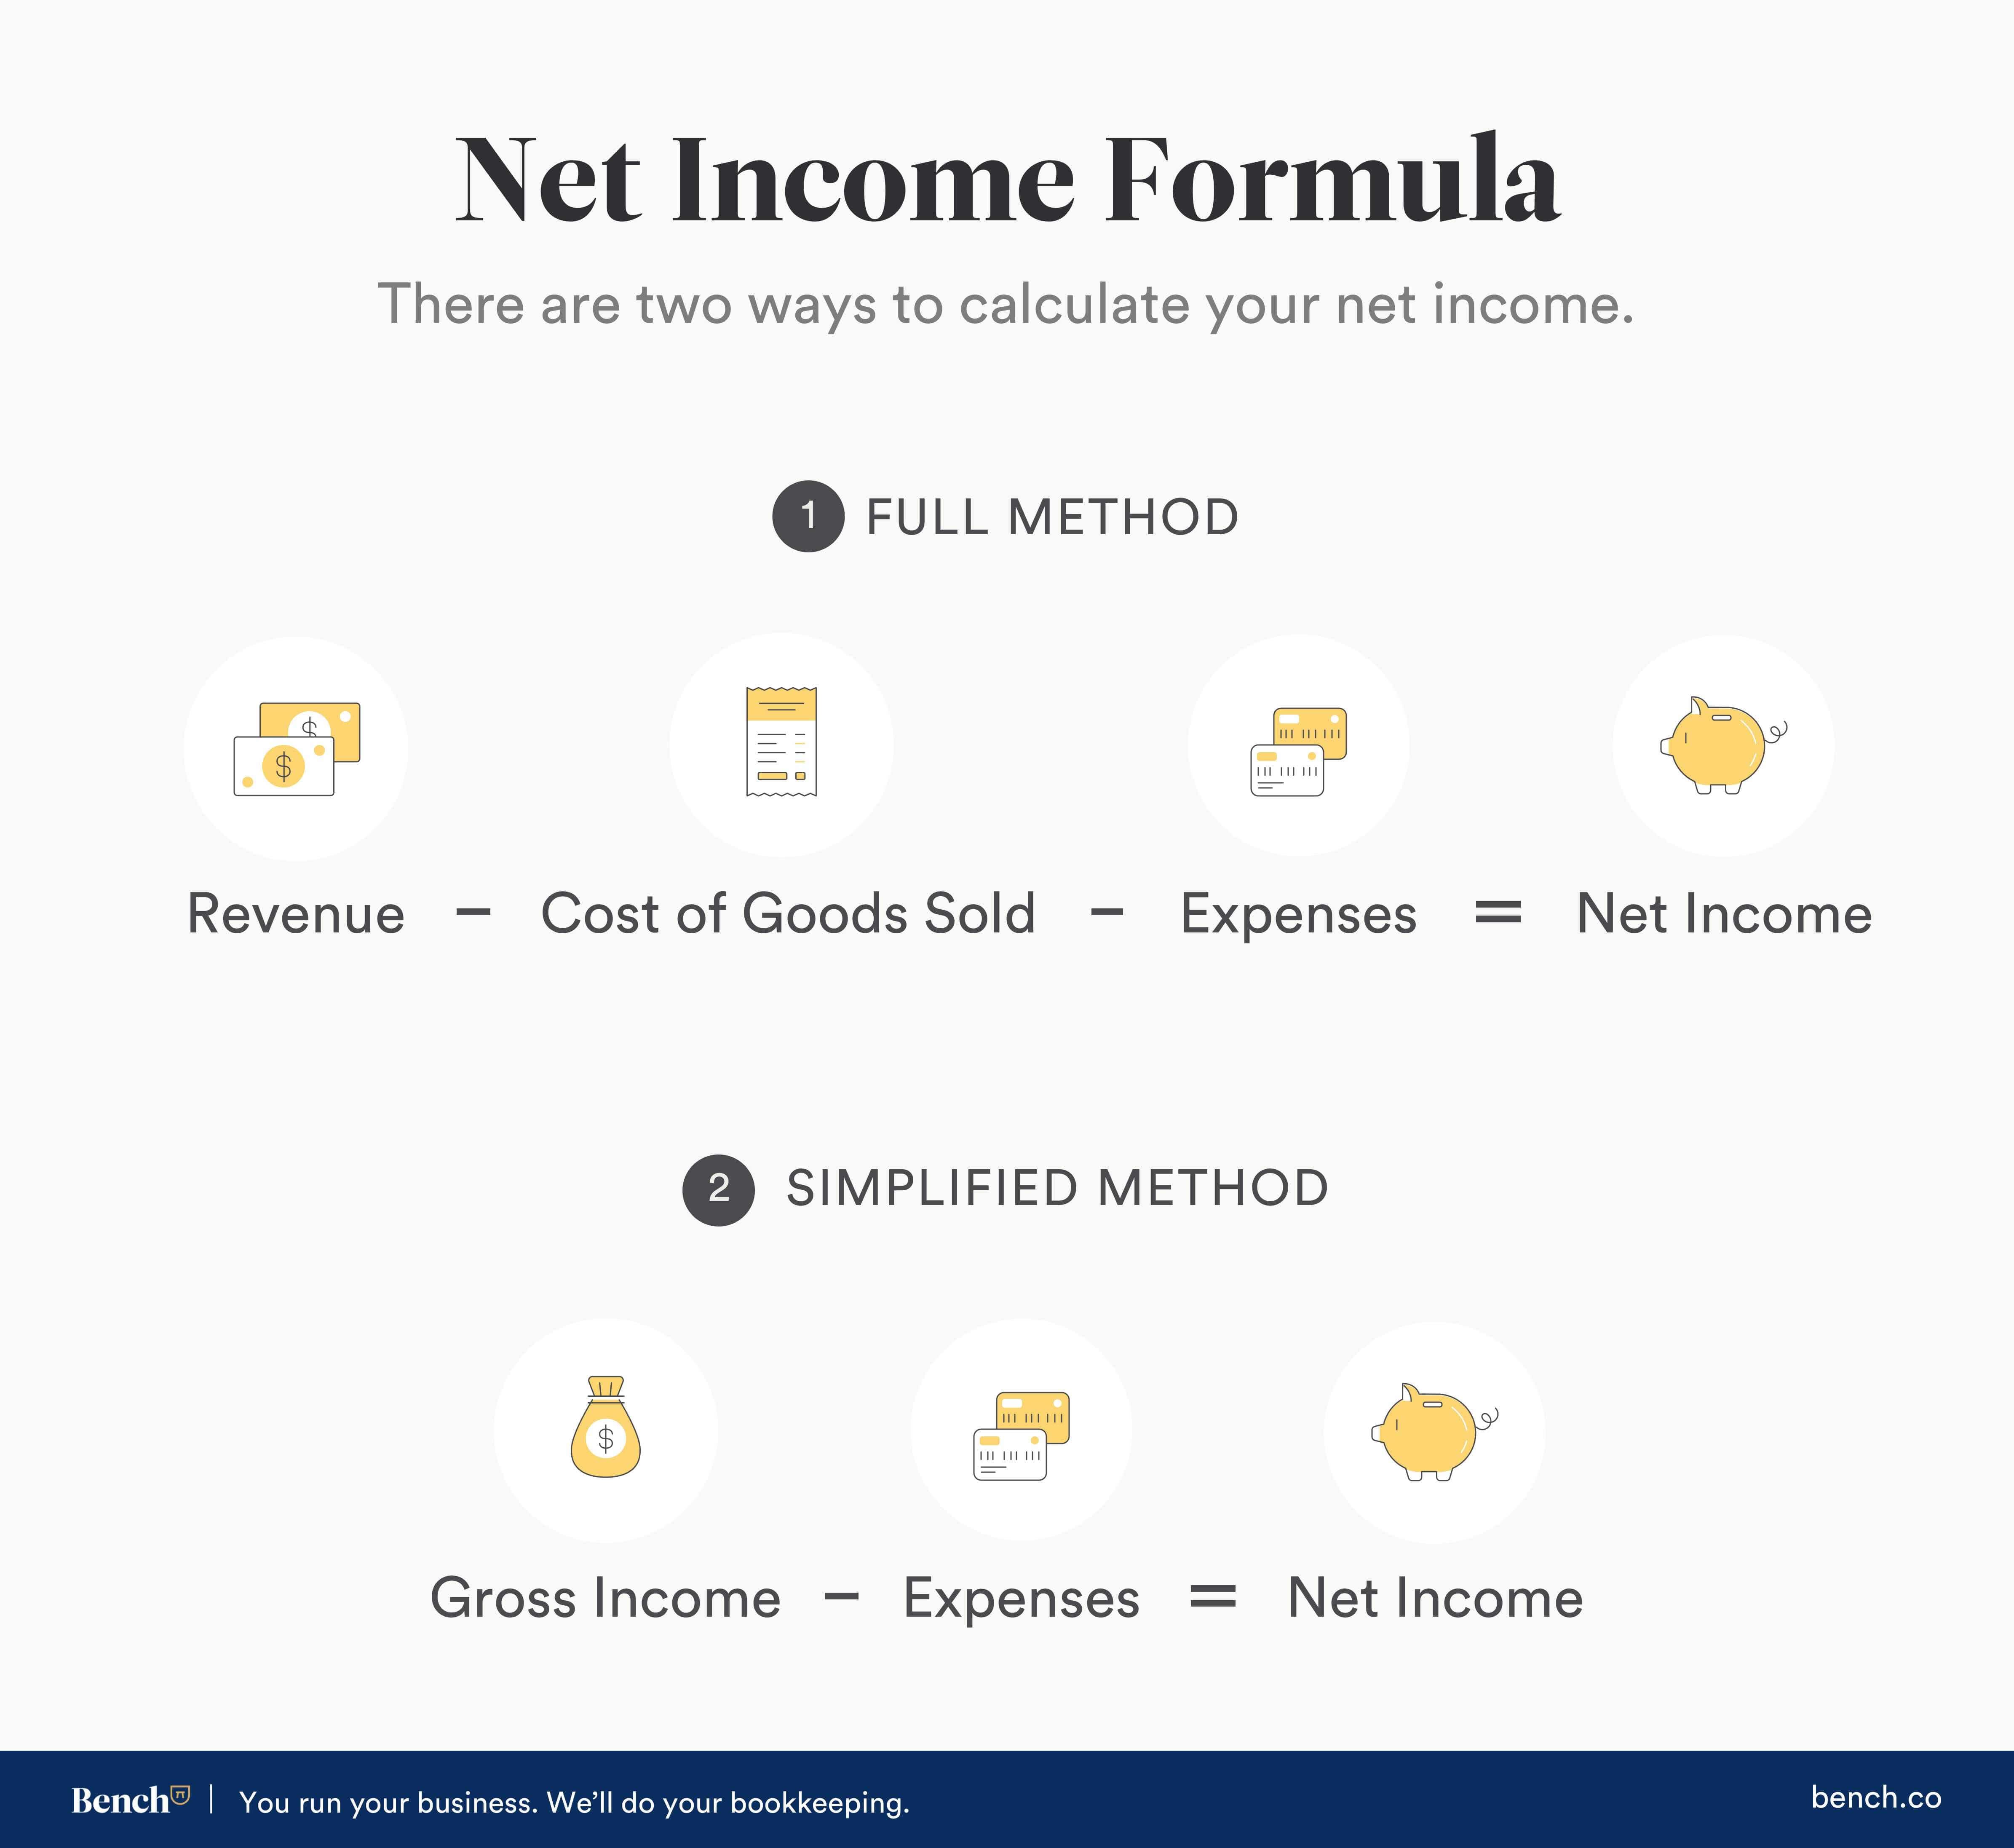 IMG / Blog / Net income formula infographic